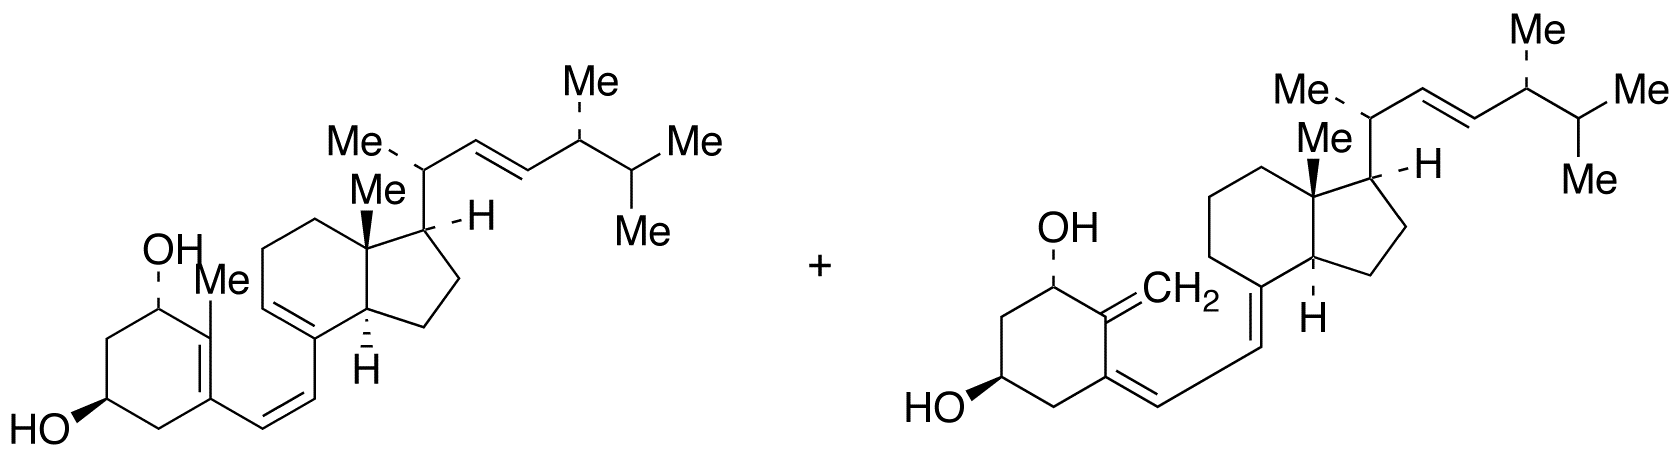 1a-Hydroxy Previtamin D2 +1a-Hydroxy Vitamin D2 ( 2 compounds)